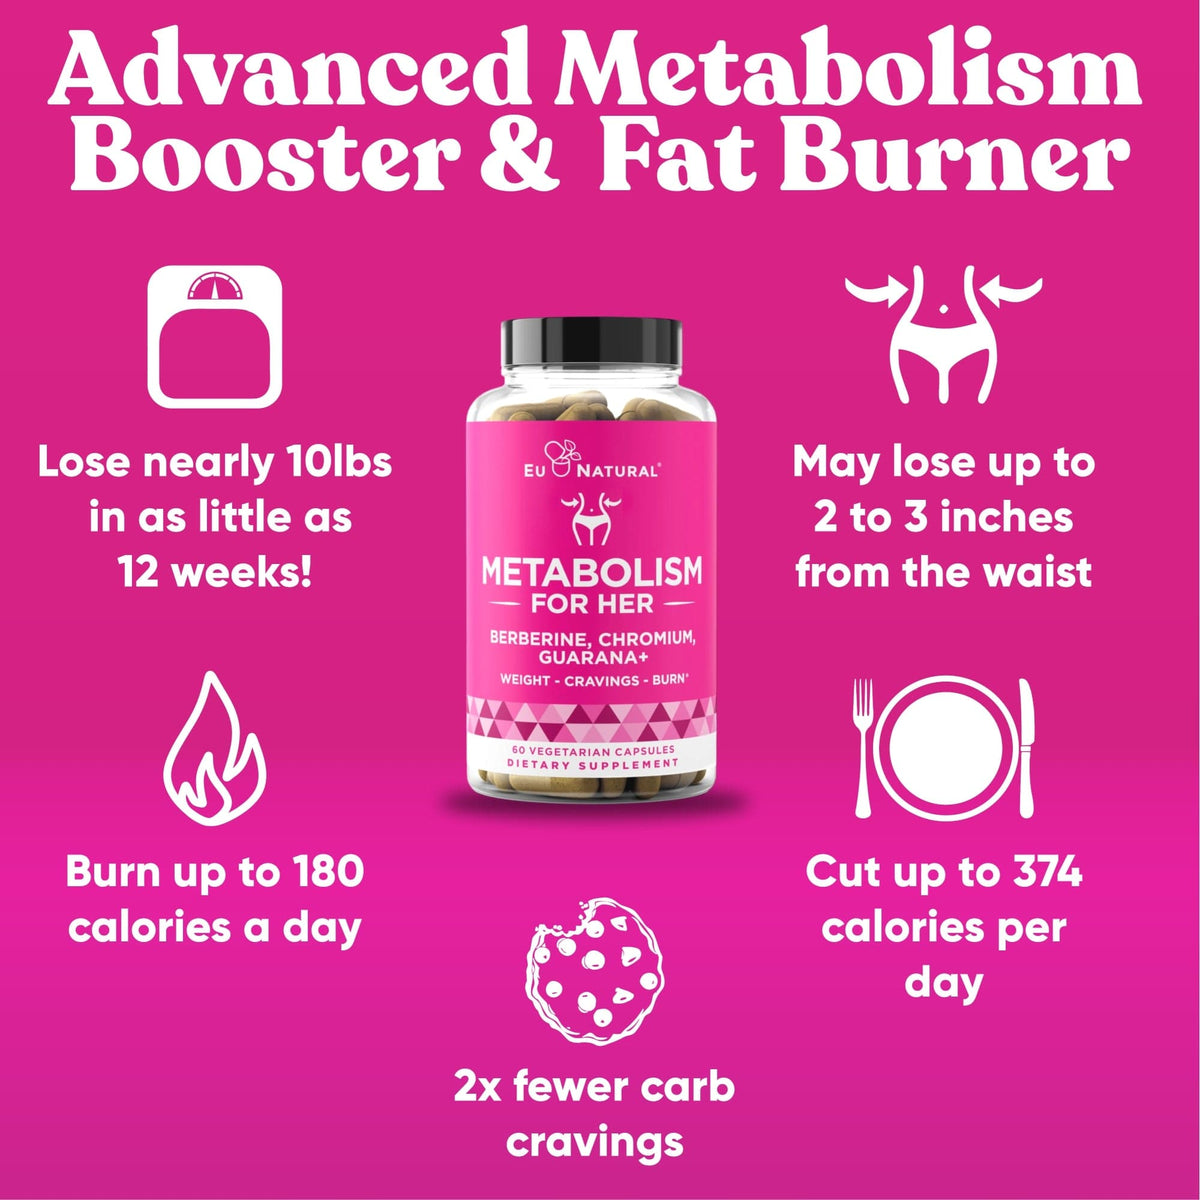 Eu Natural METABOLISM FOR HER – boost metabolism, control cravings, burn fat (3 pack)